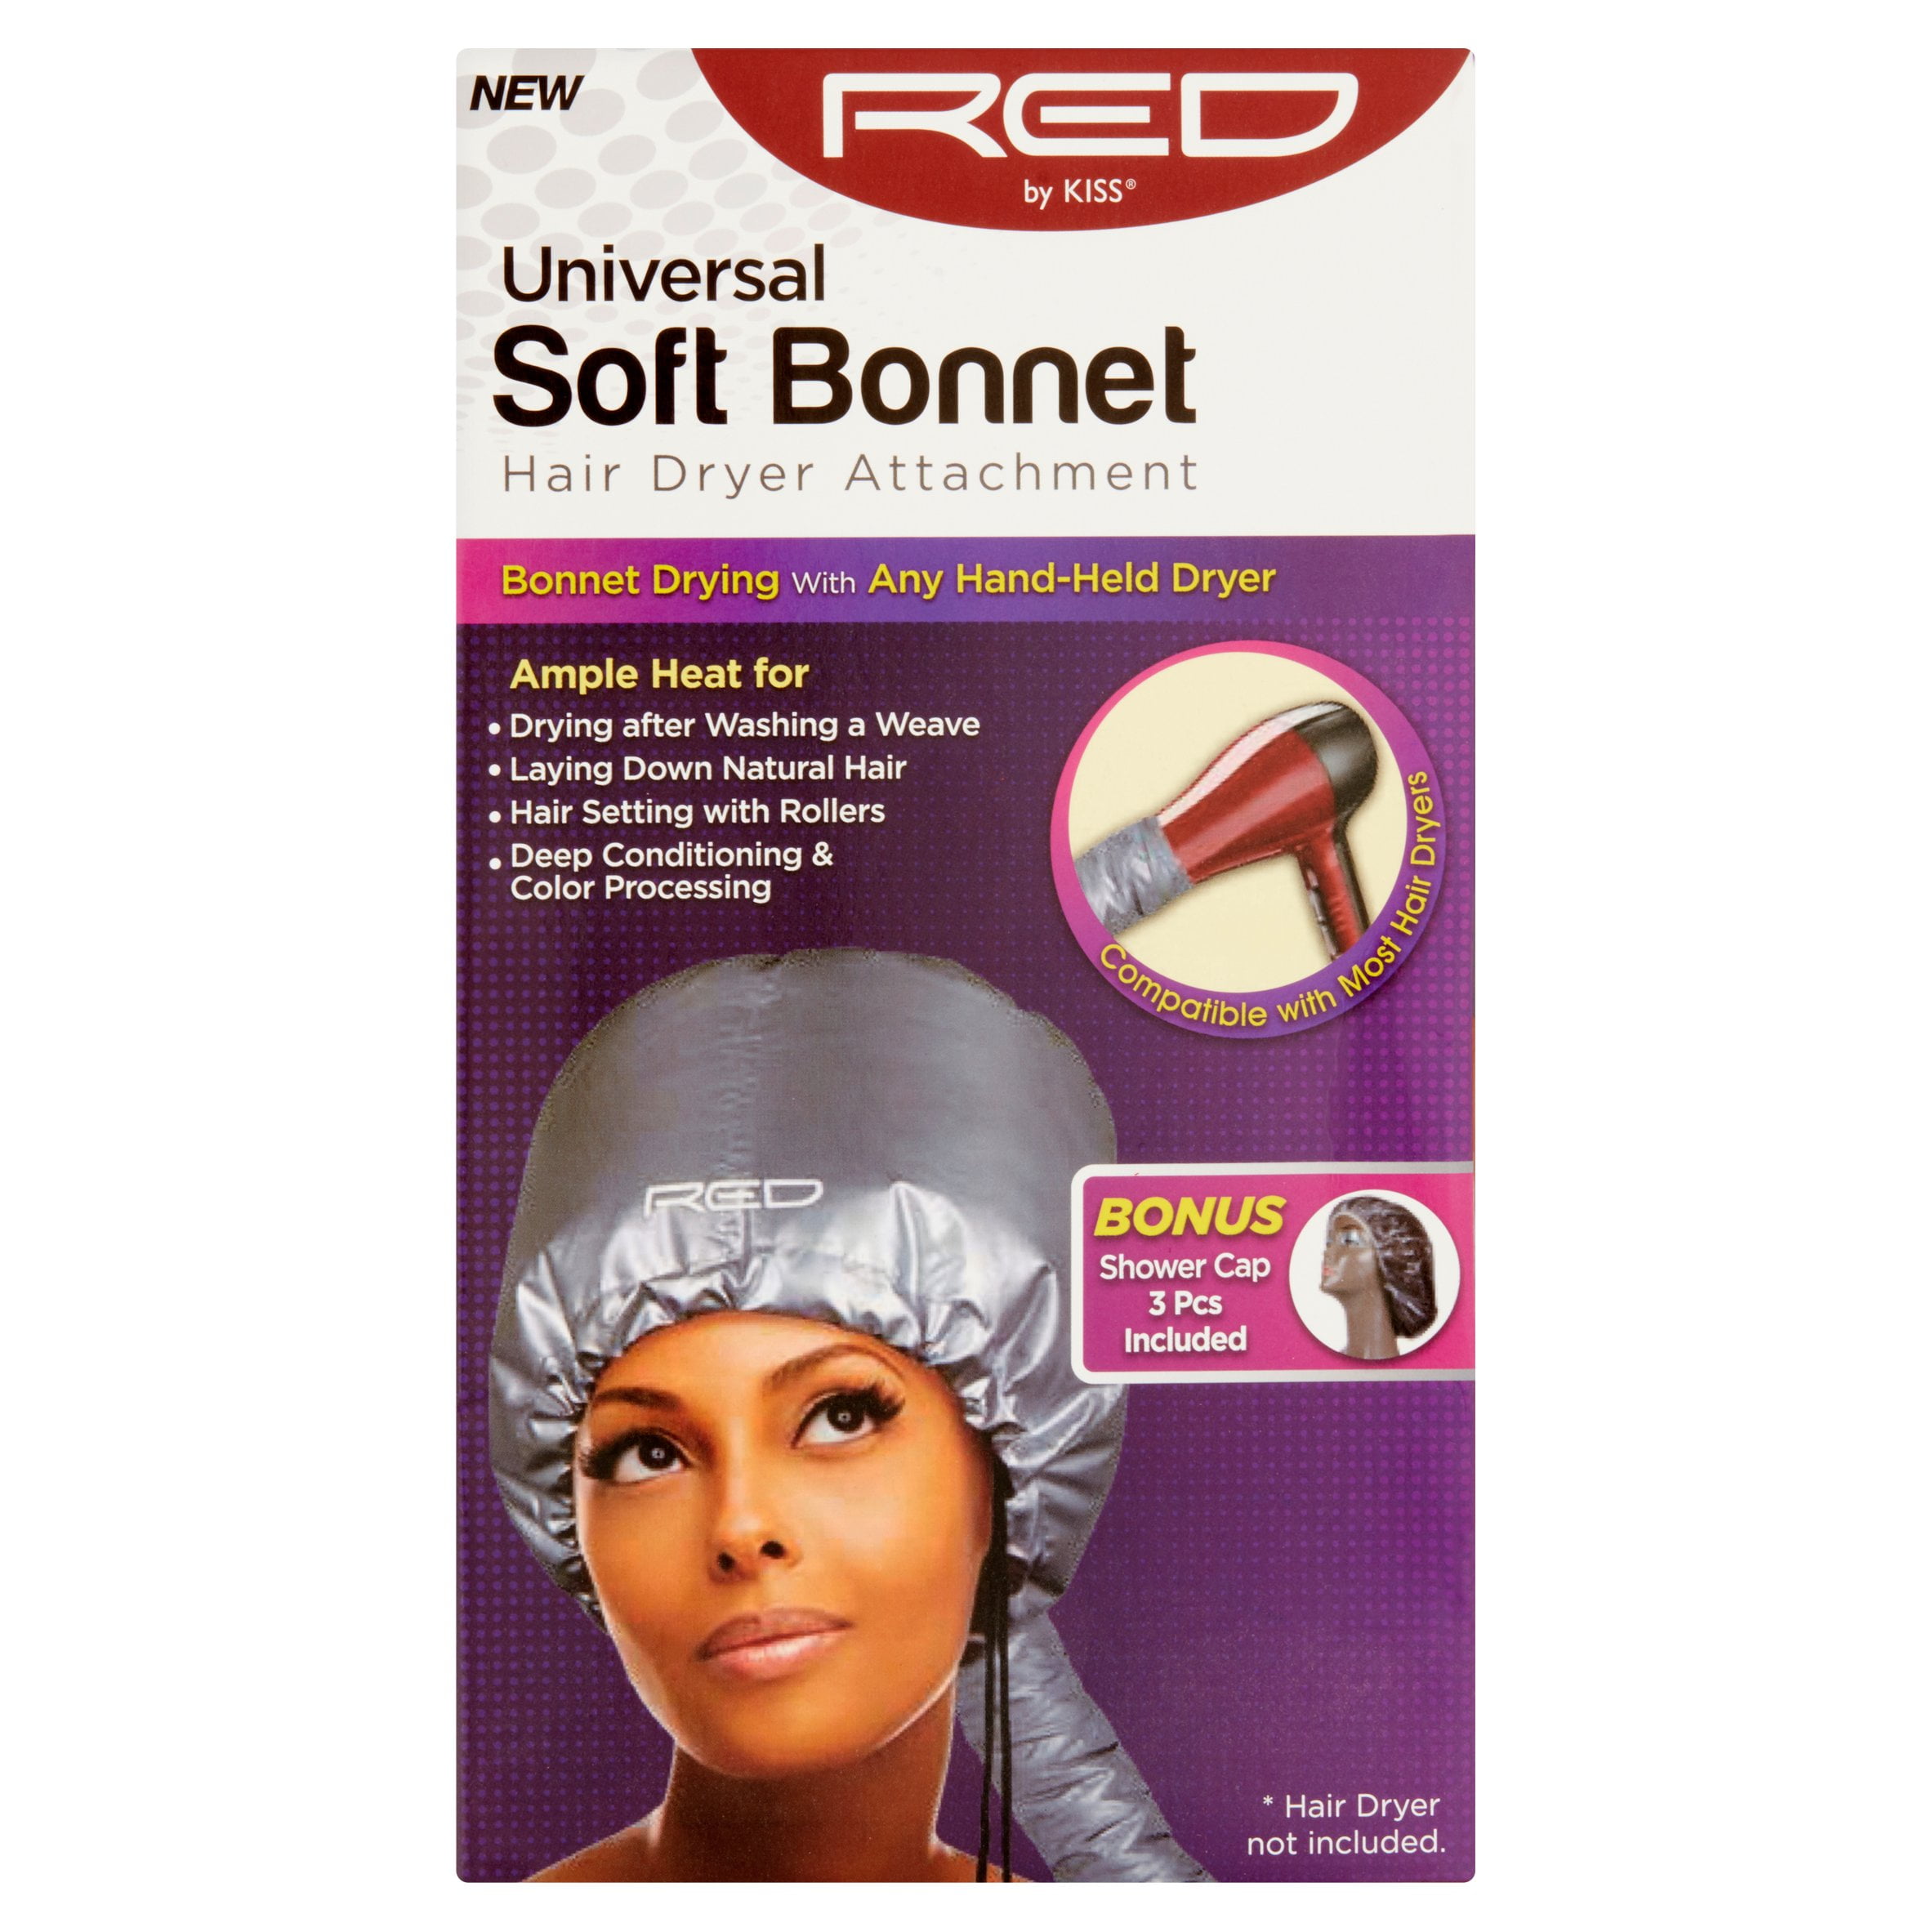 Universal Portable Soft Hood Hair Drying Salon Cap Roller Blow Dryer Attachment 